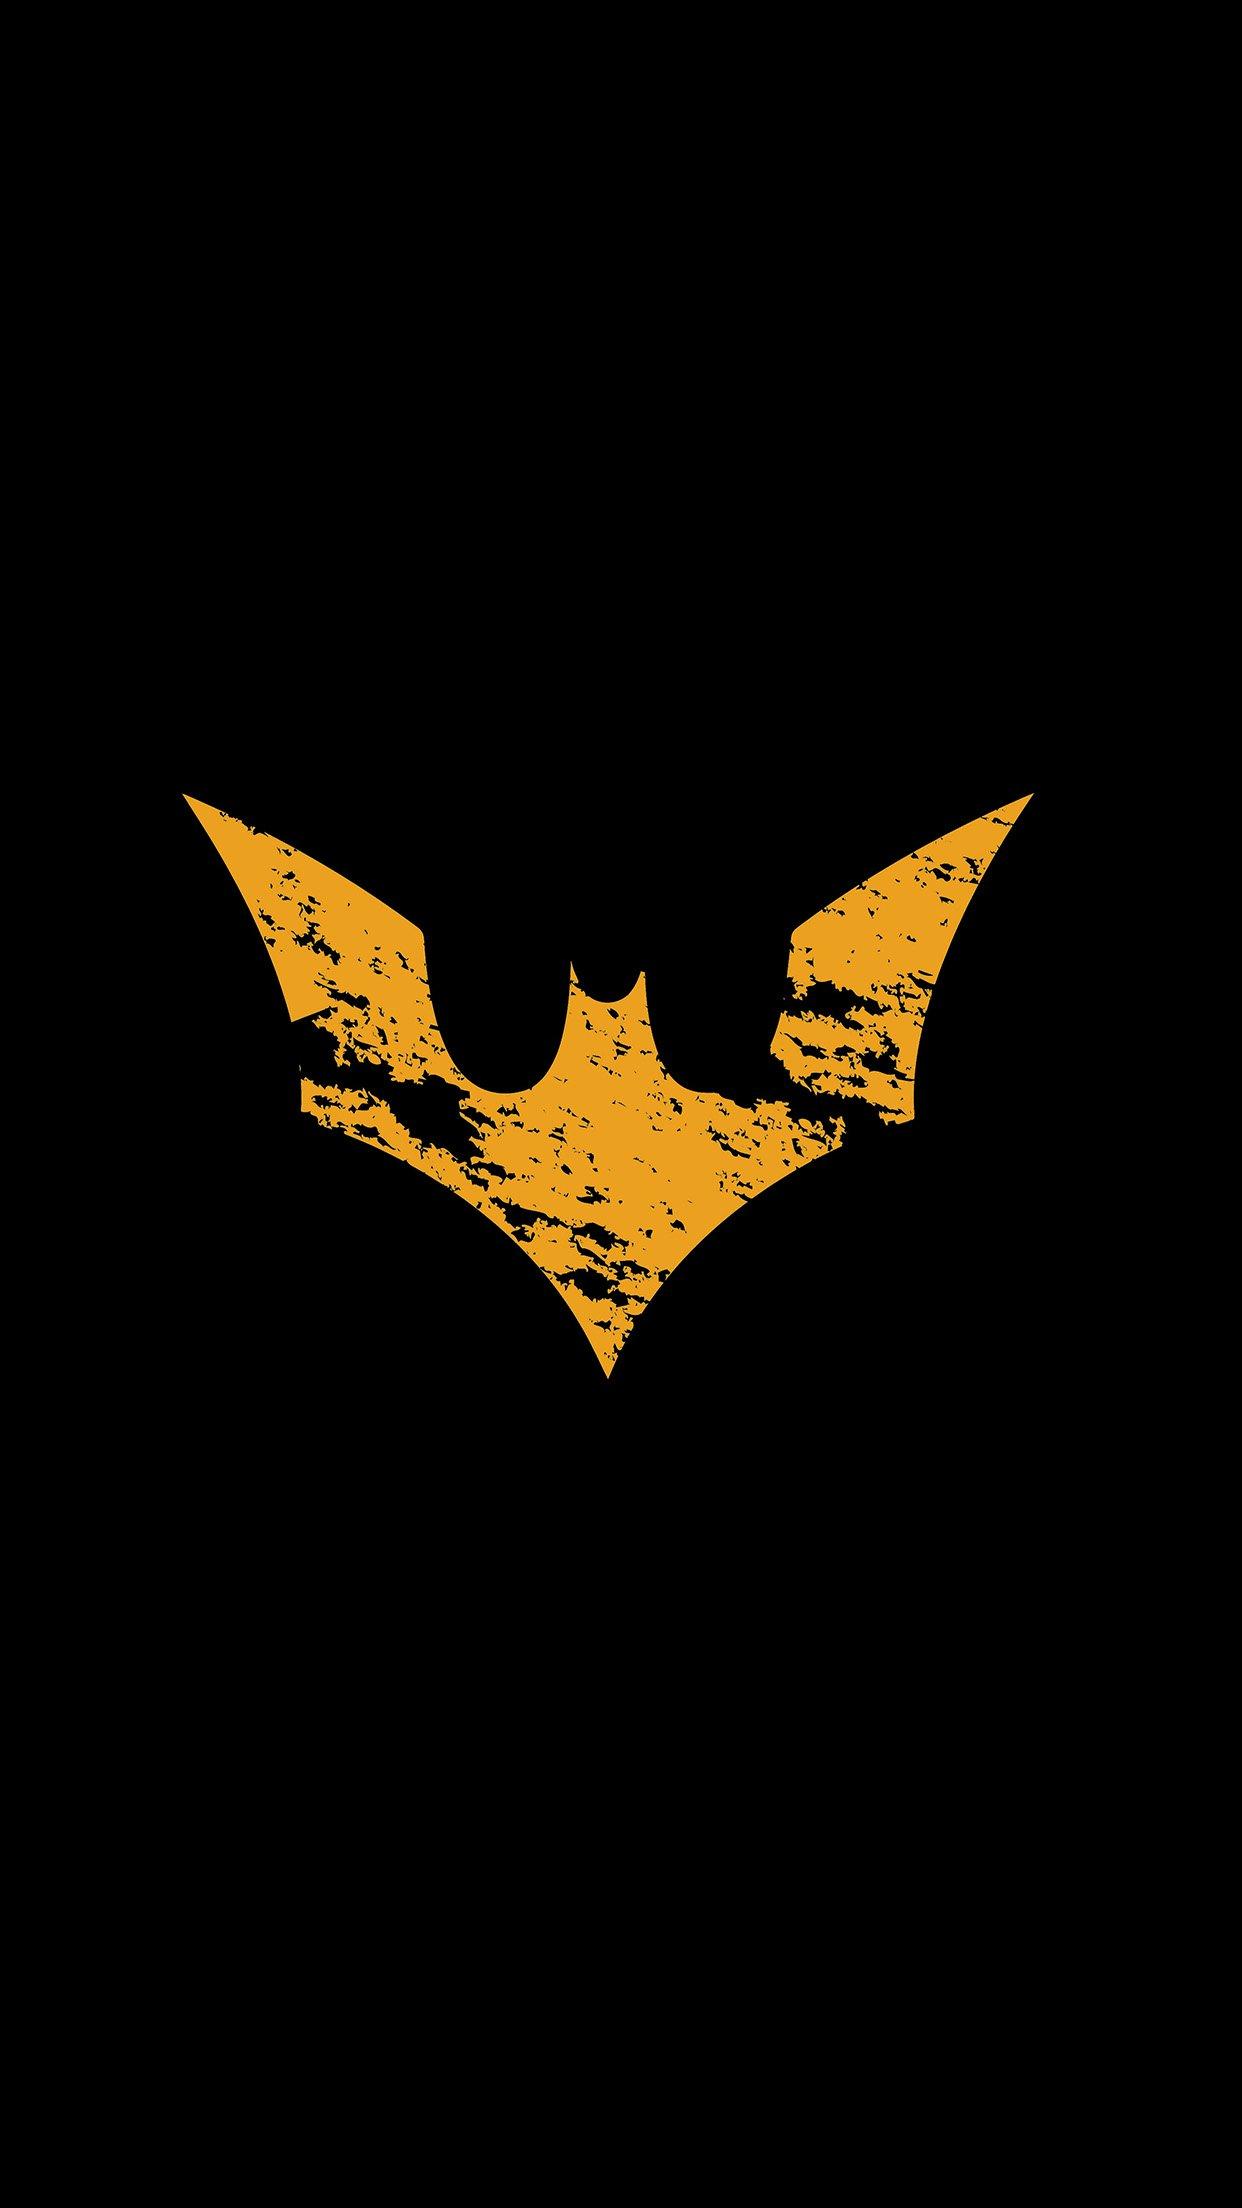 iPhone X wallpaper. batman logo yellow